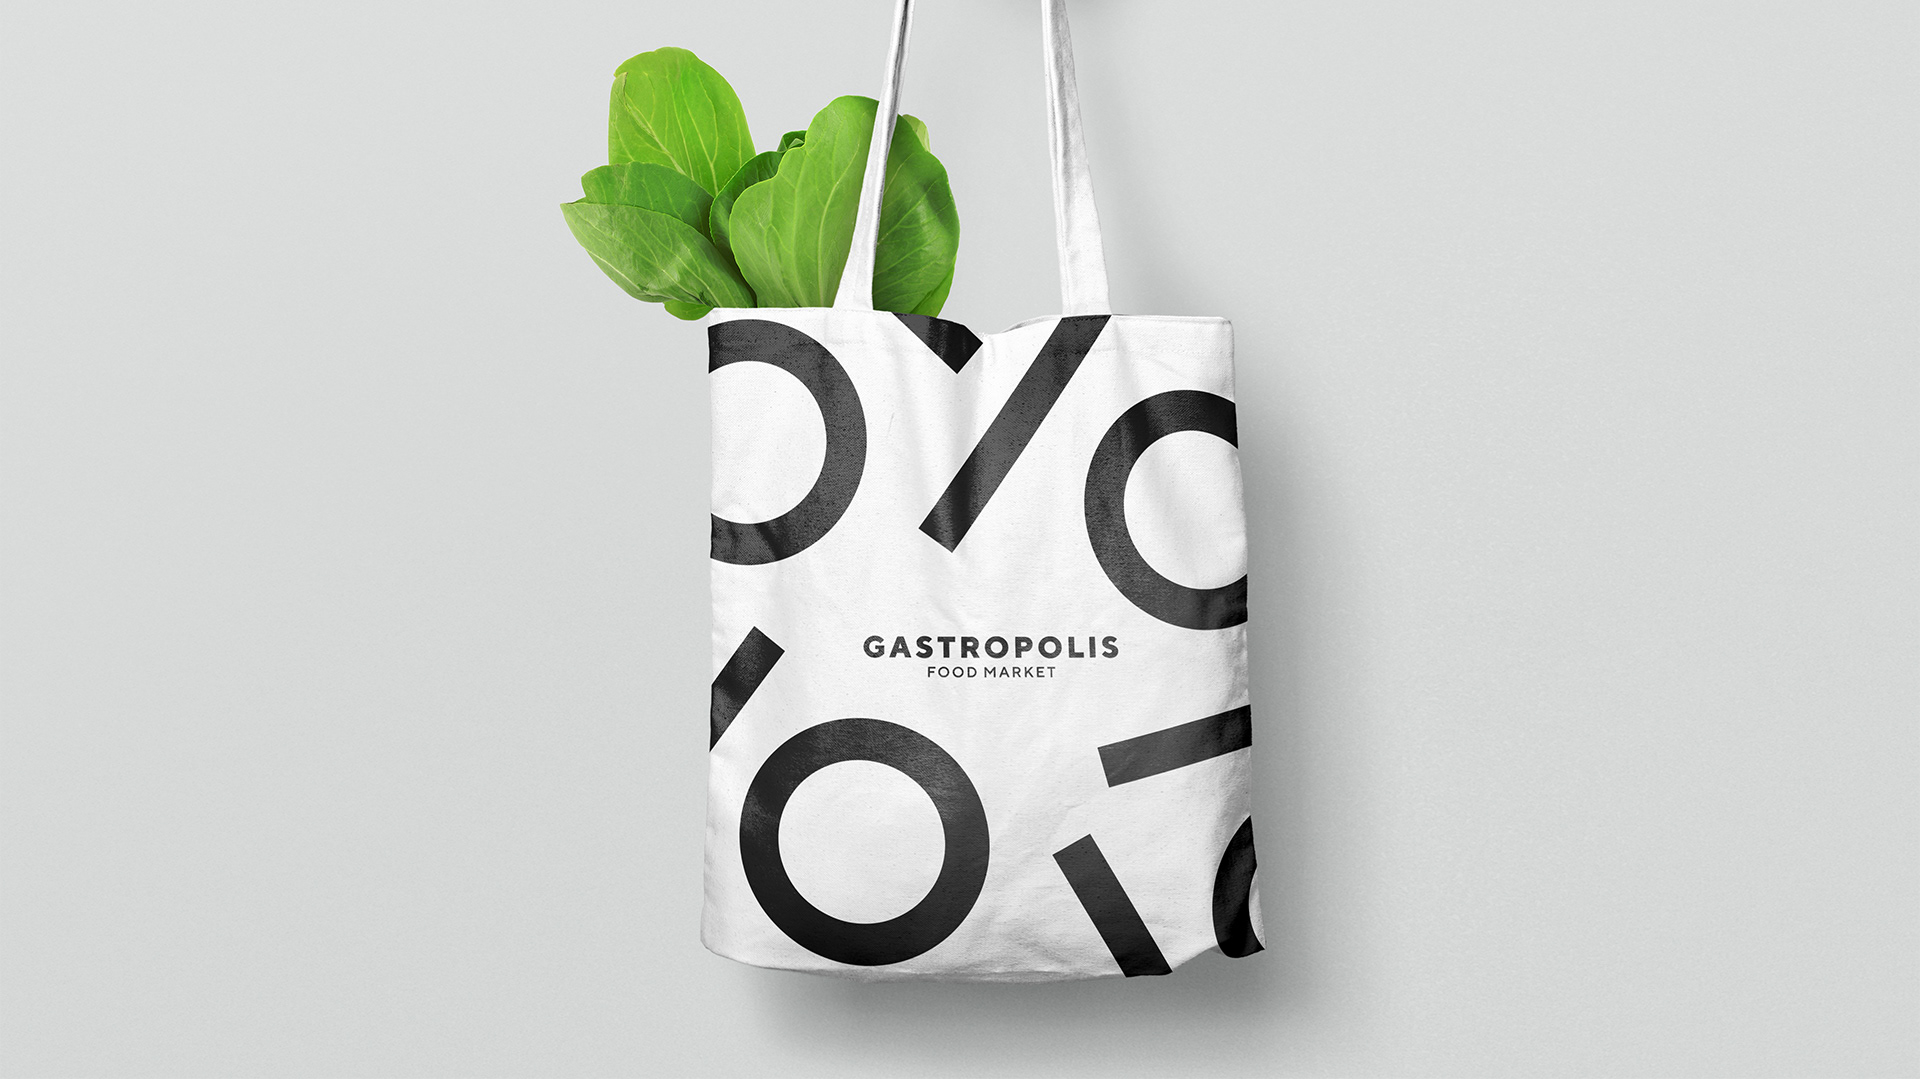 Gastropolis Food Market Branding By Formascope Design